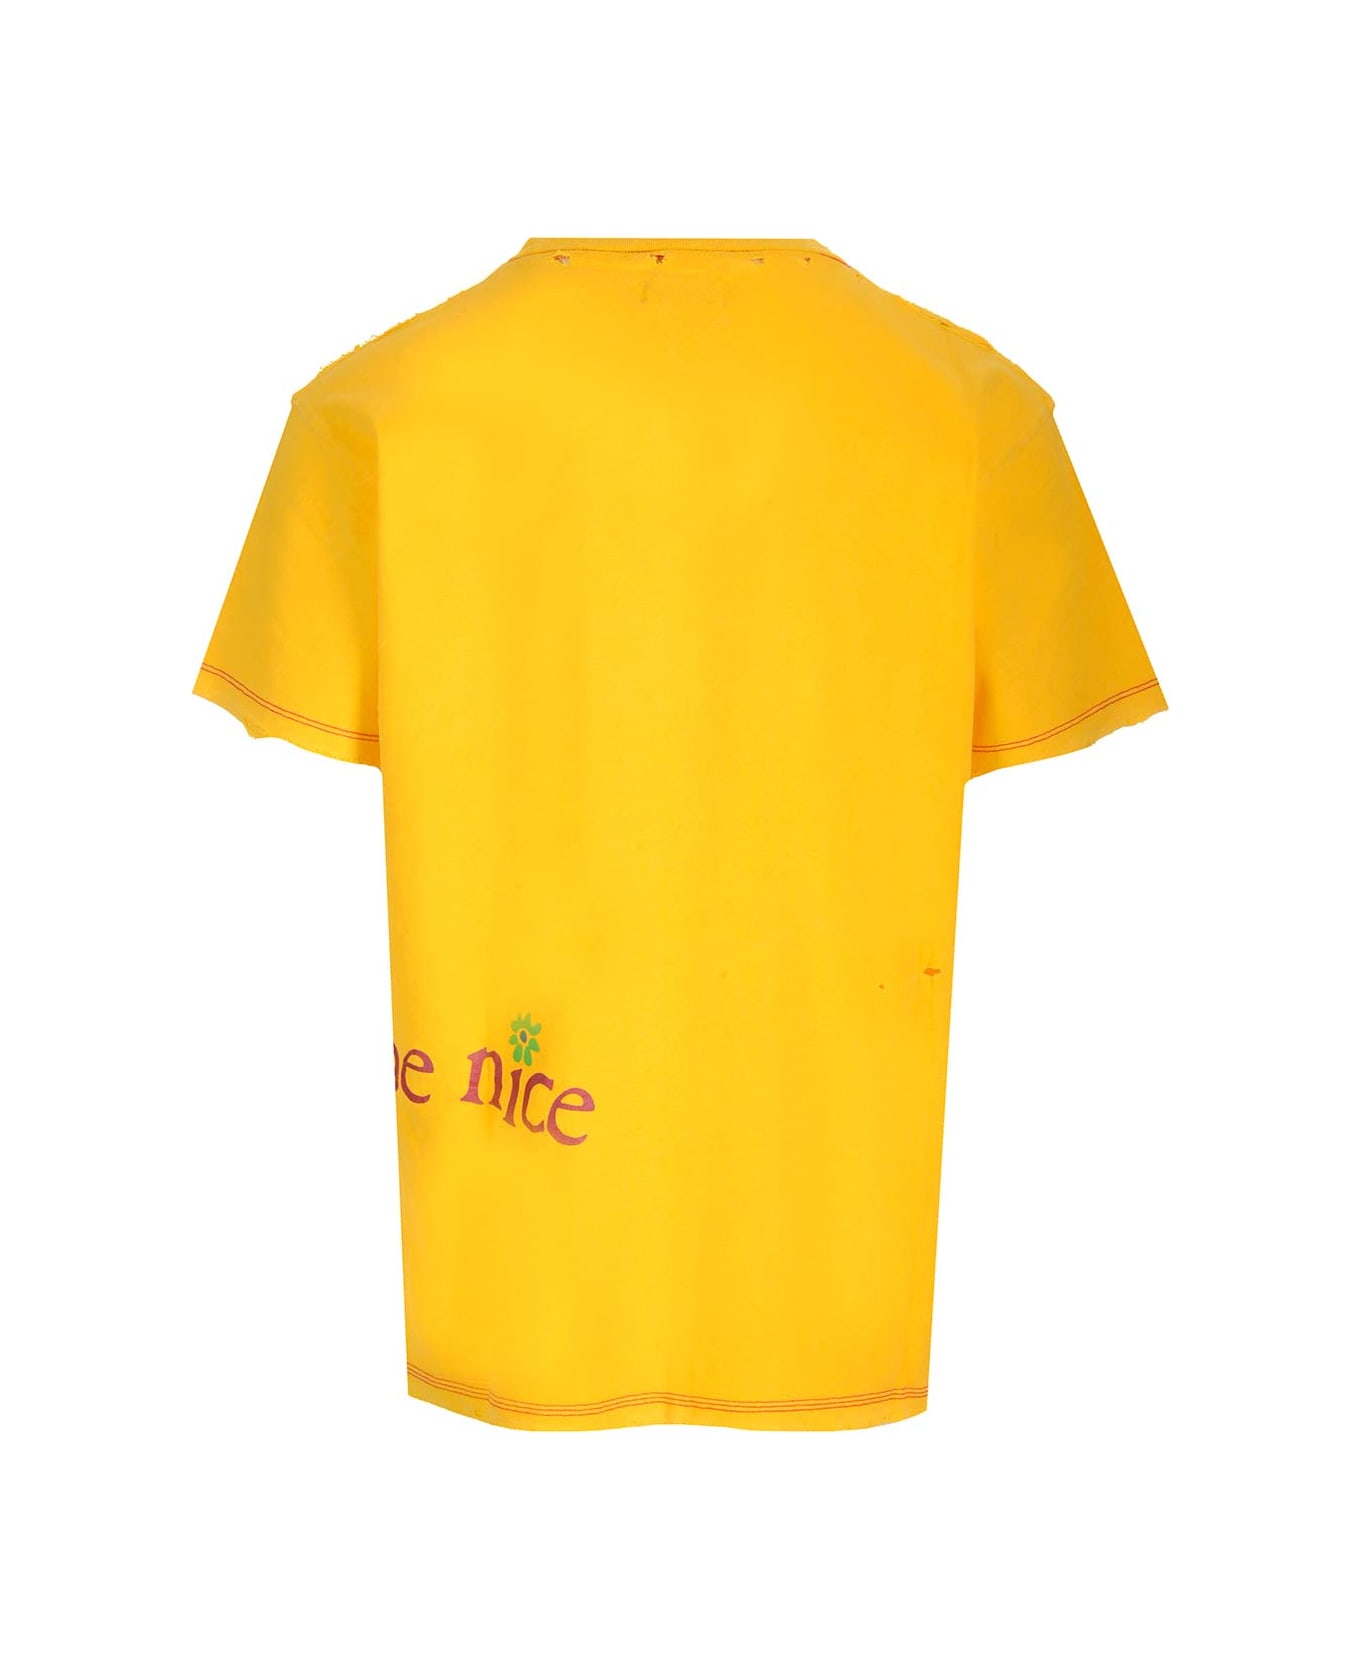 ERL 'venice' T-shirt - Yellow シャツ